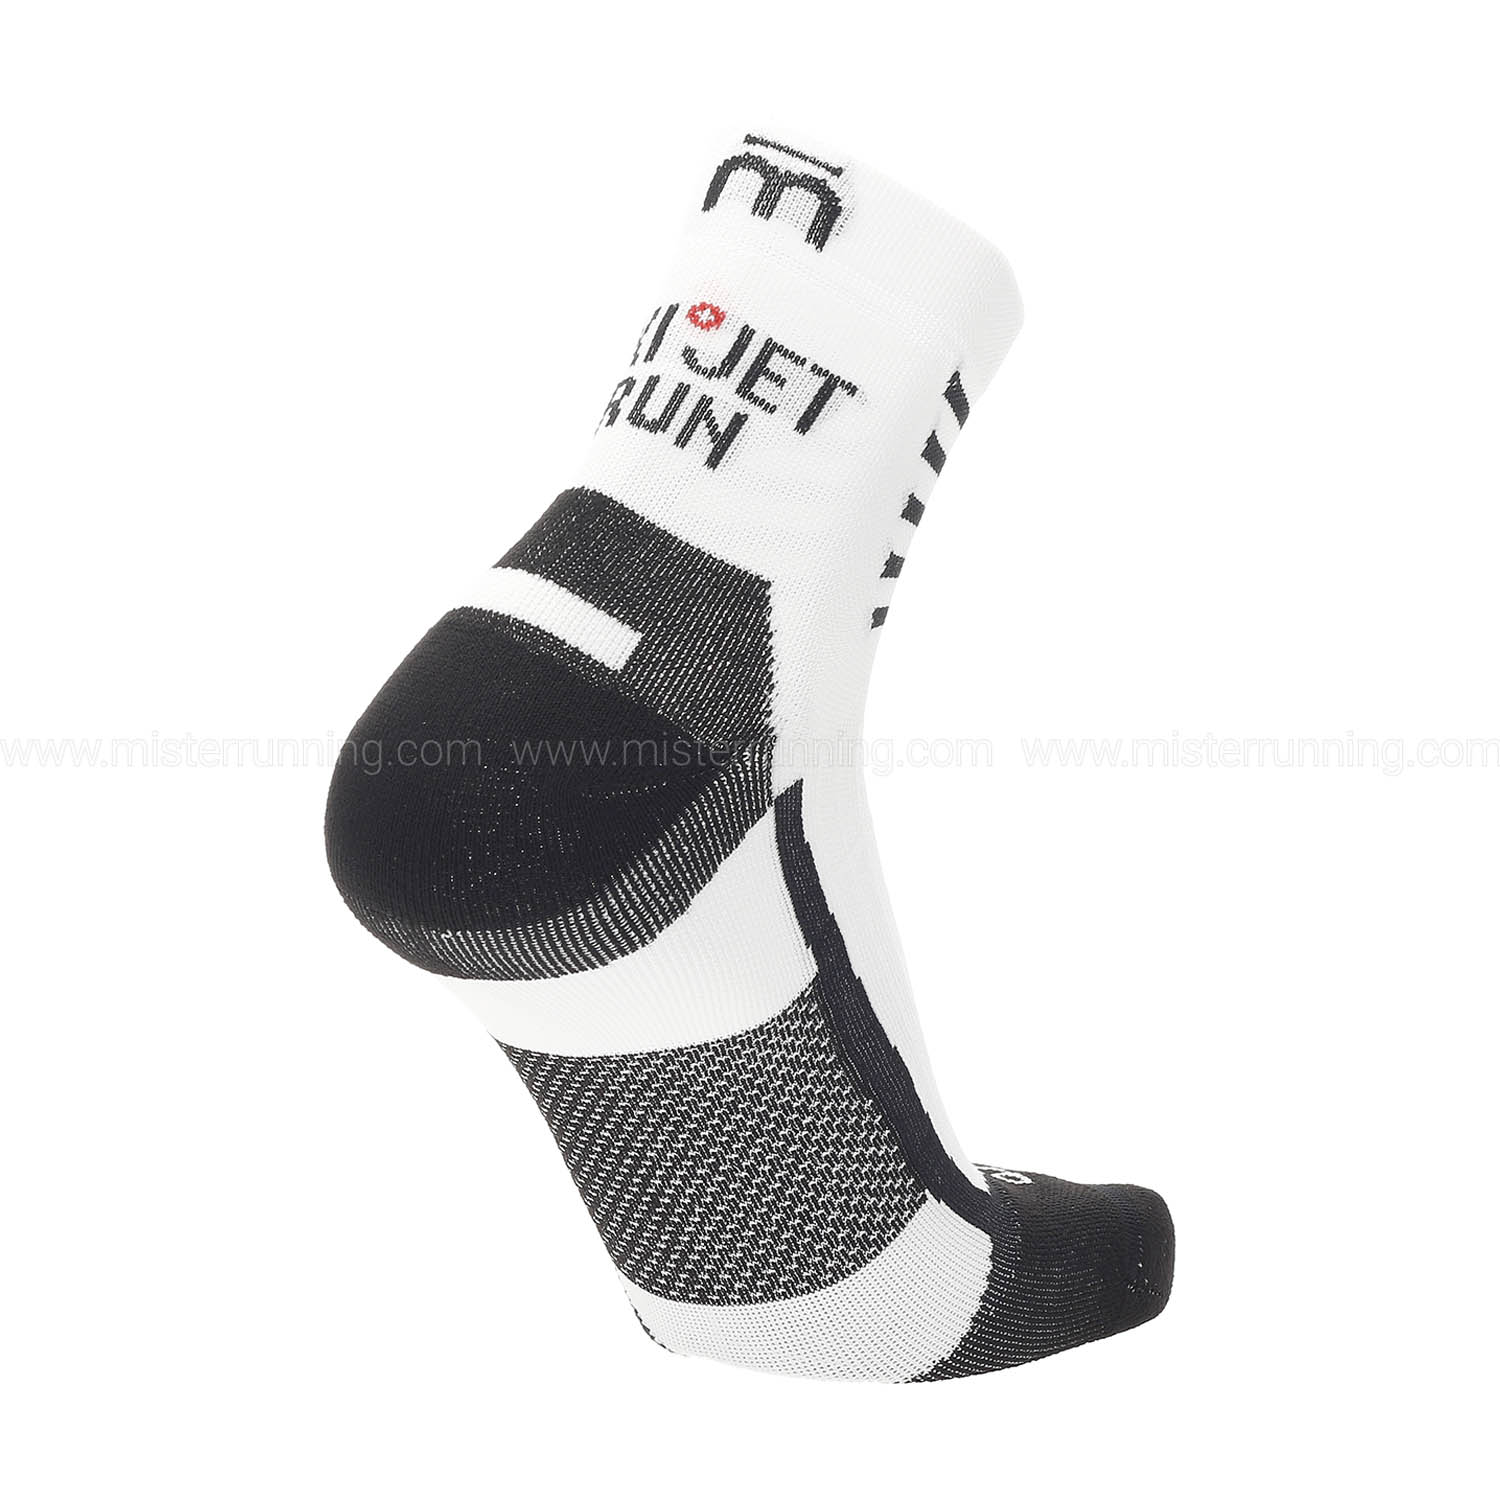 Mico Oxi-jet Light Weight Compression Socks - Bianco